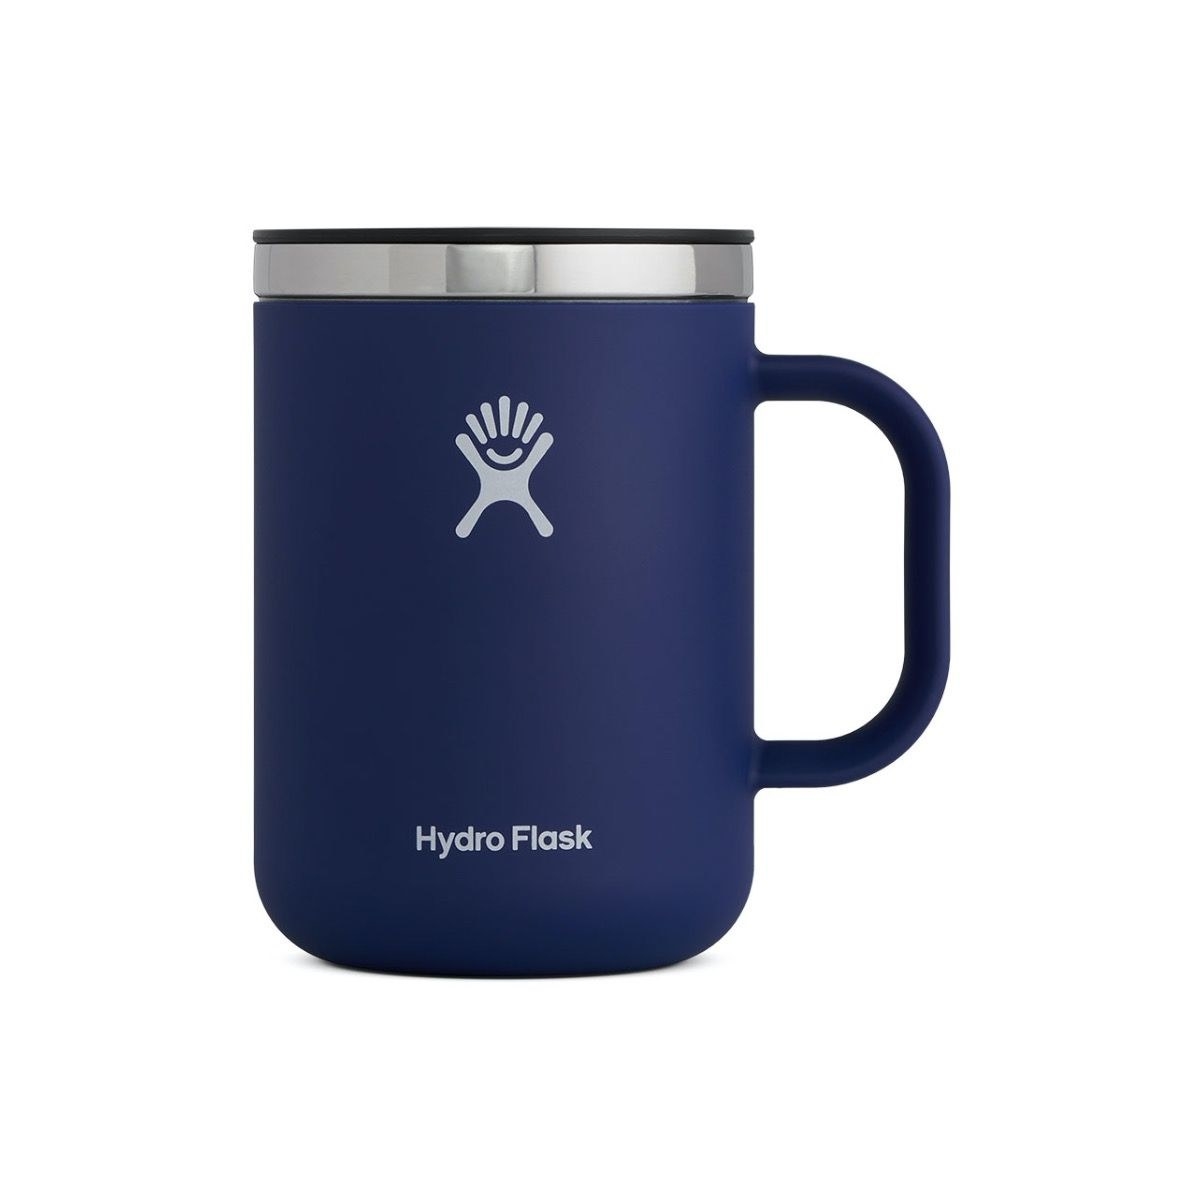 The cobalt blue Hydro Flask mug.